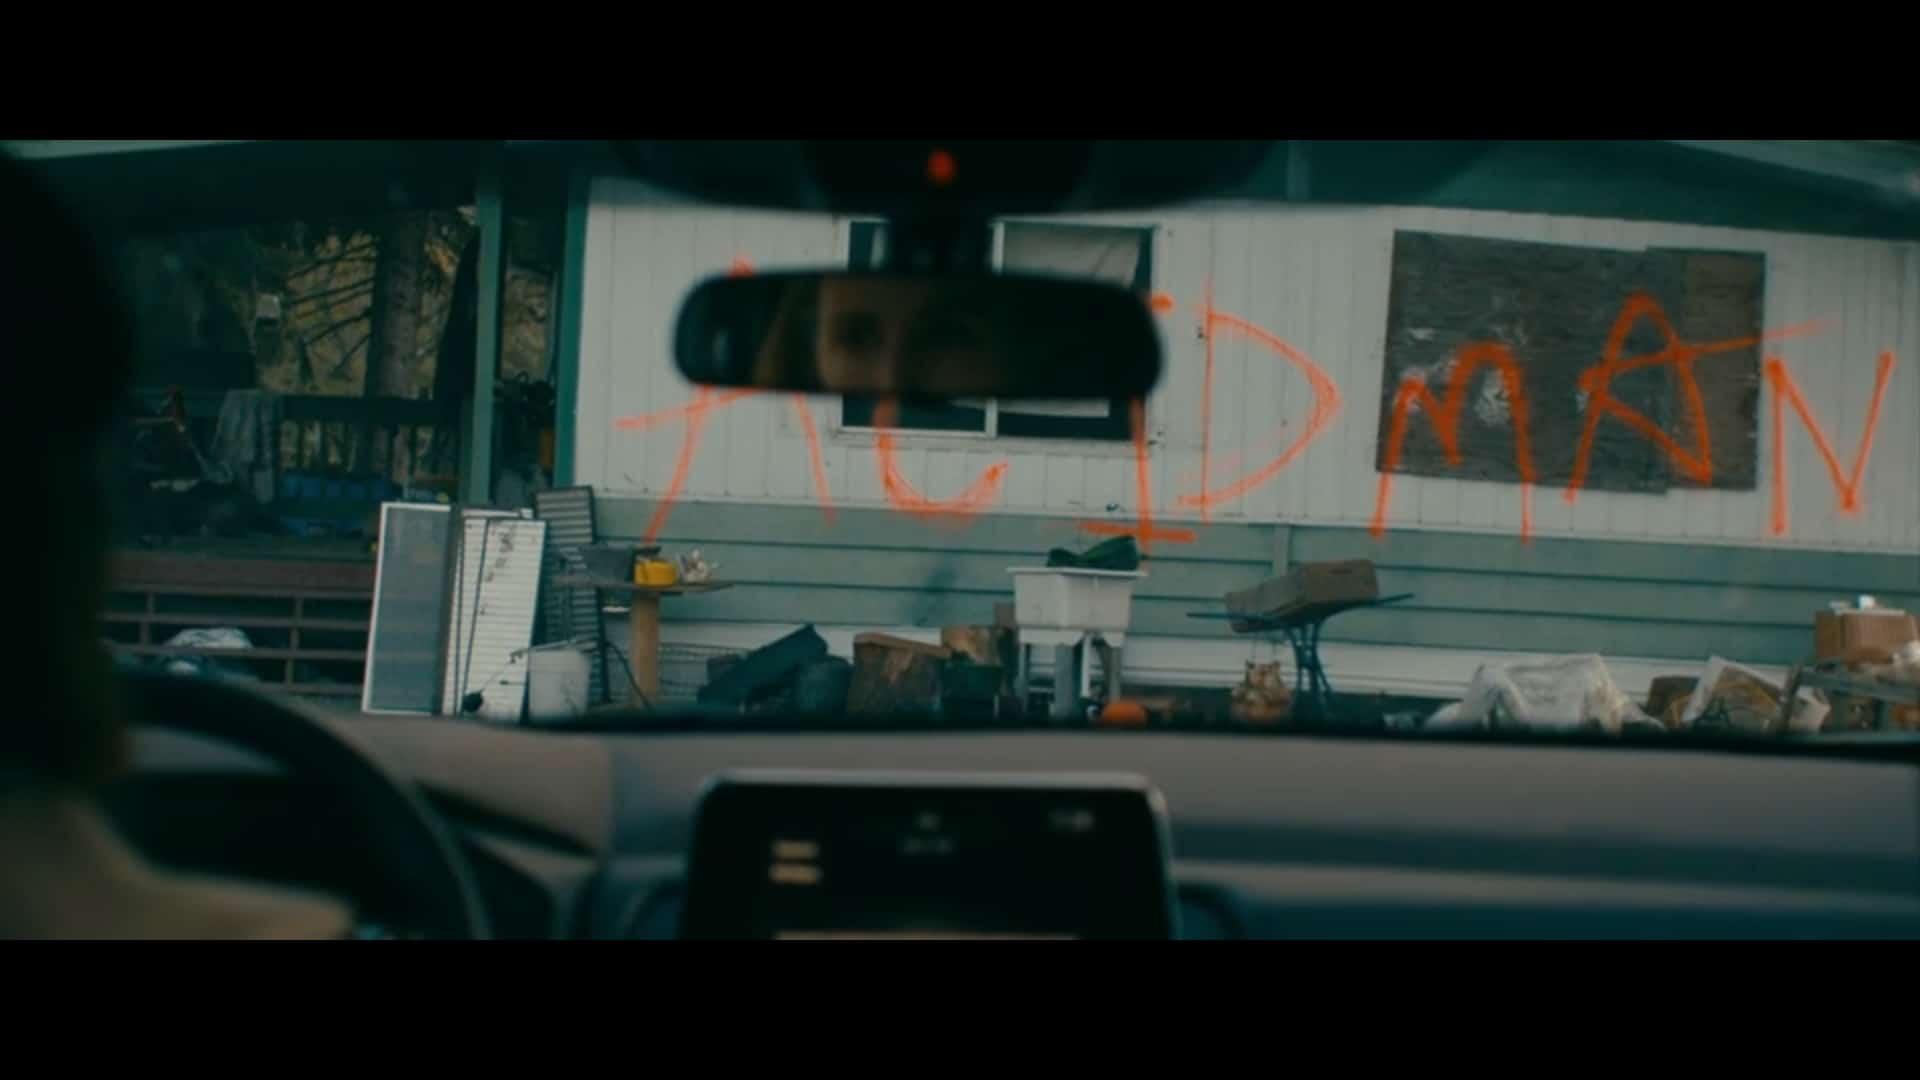 Graffiti on Lloyd's trailer calling him 'Acidman,'